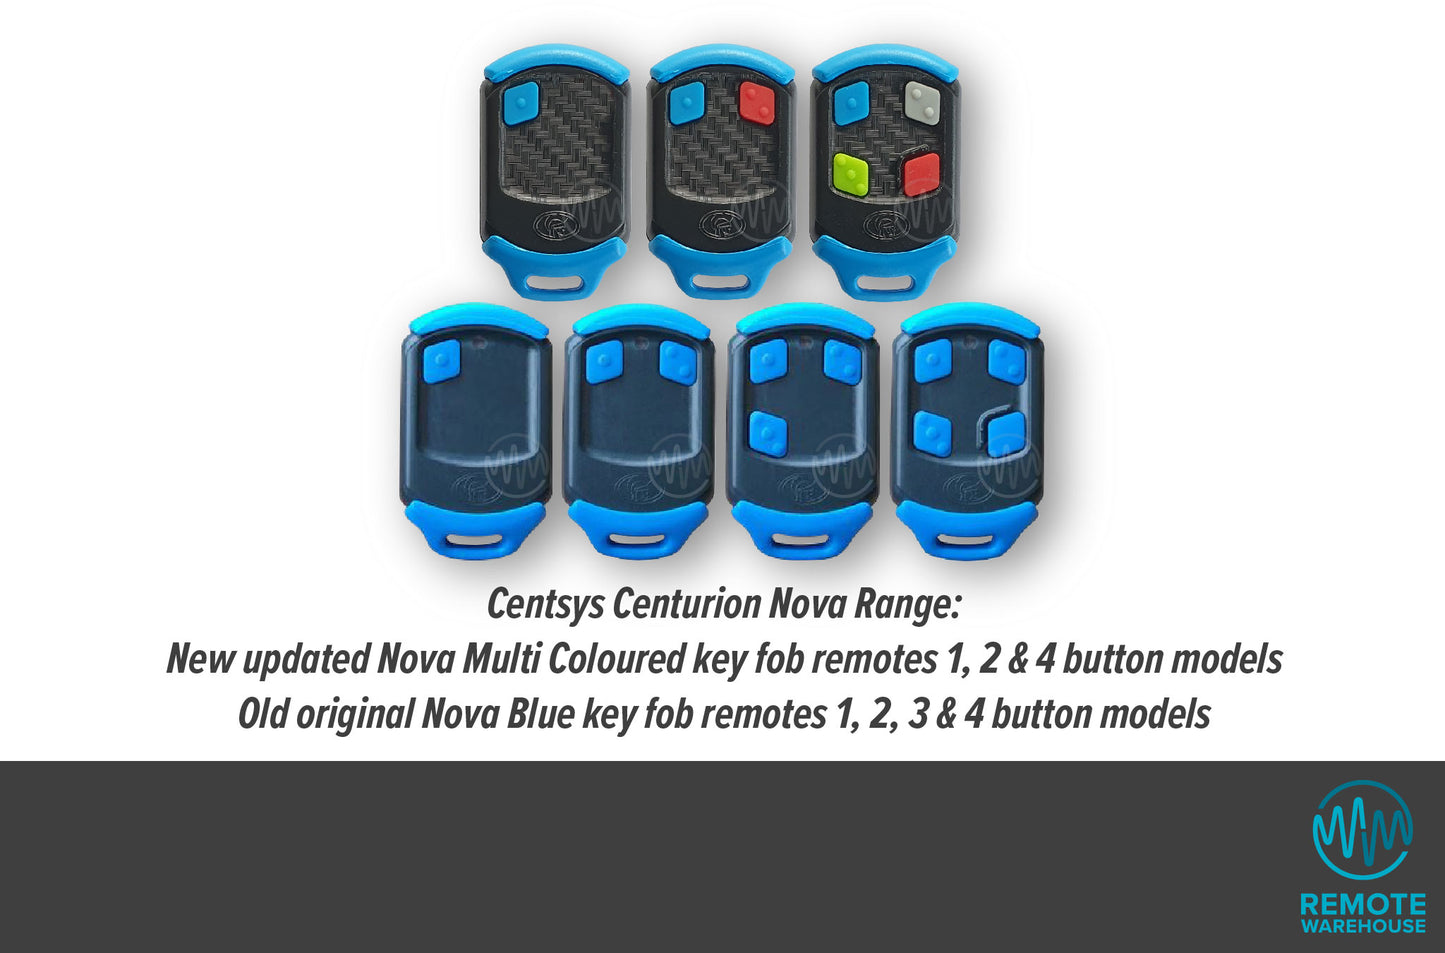 Centsys Centurion New Nova Garage/Gate Remote